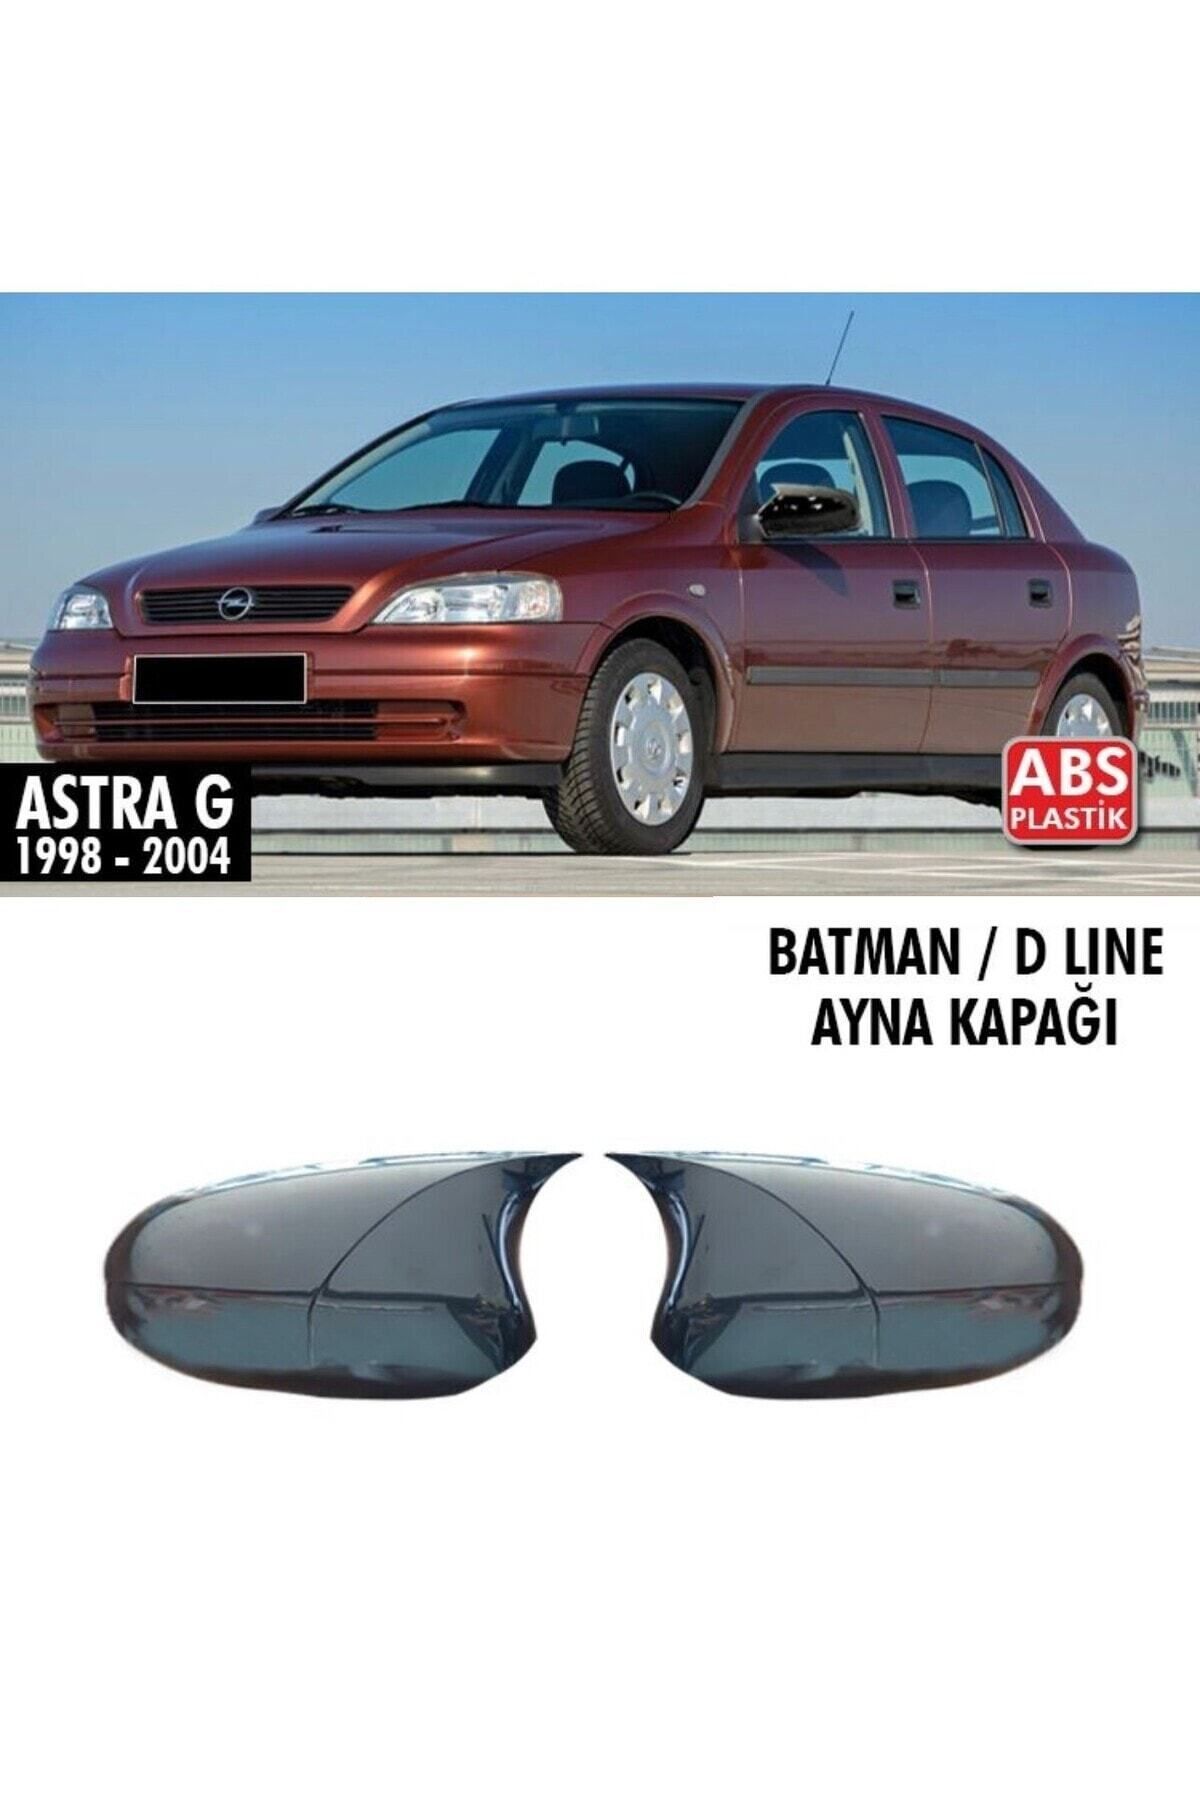 BatmanGarage Opel Astra G Batman Yarasa Ayna Kapağı 1998-2004